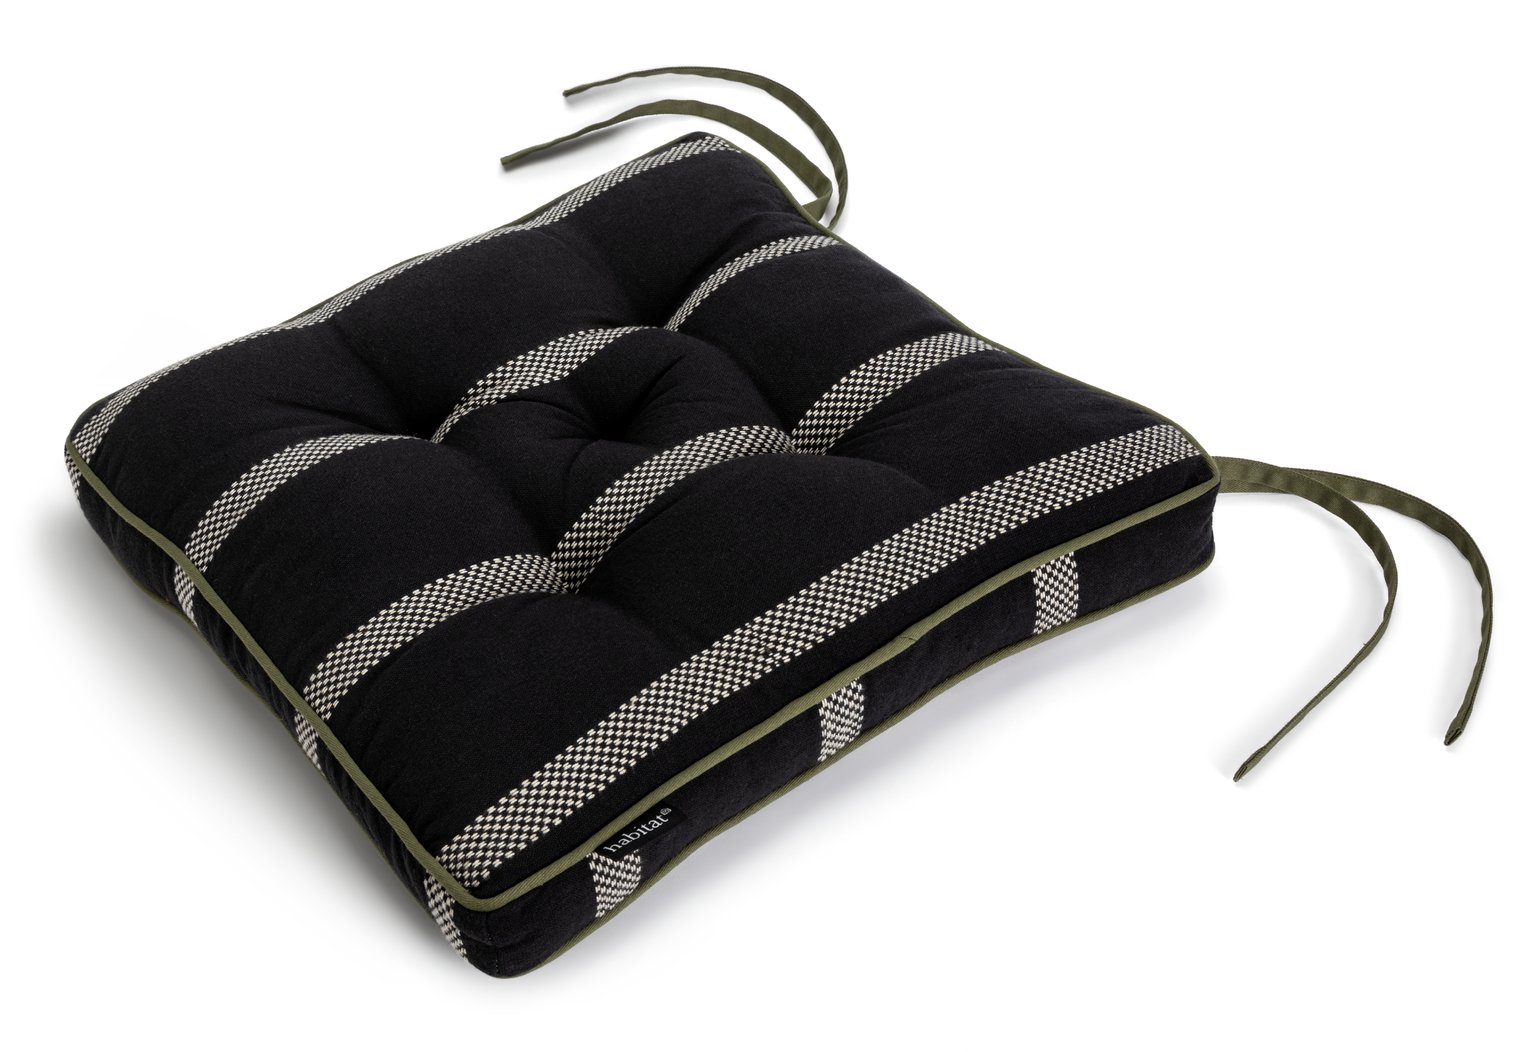 Habitat Woven Stripe Pack of 2 Seat Cushion - Black